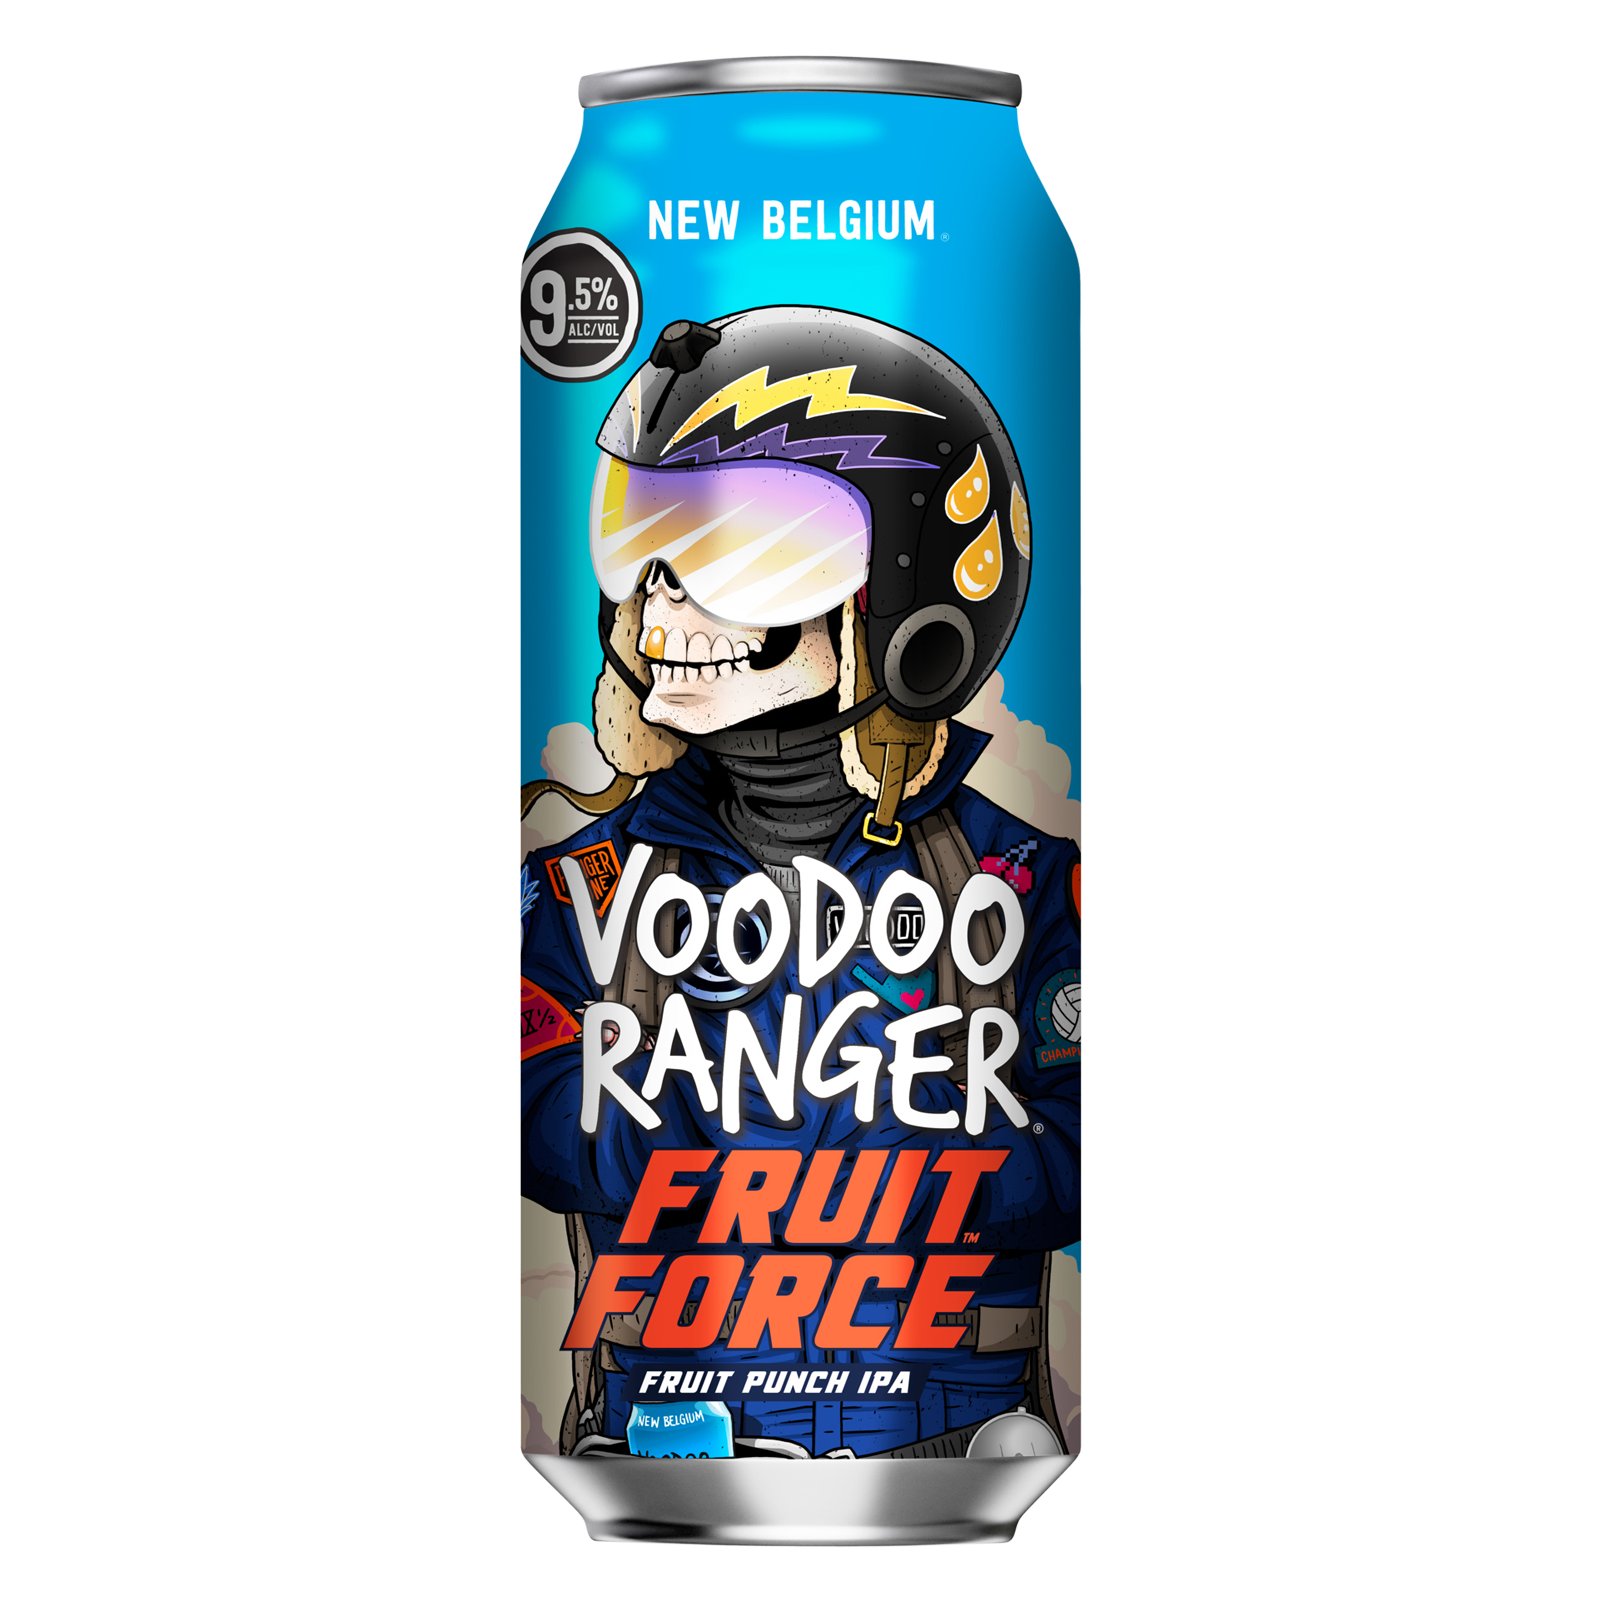 New Belgium Voodoo Ranger Fruit Force IPA Single 19.2oz Can 9.5% ABV